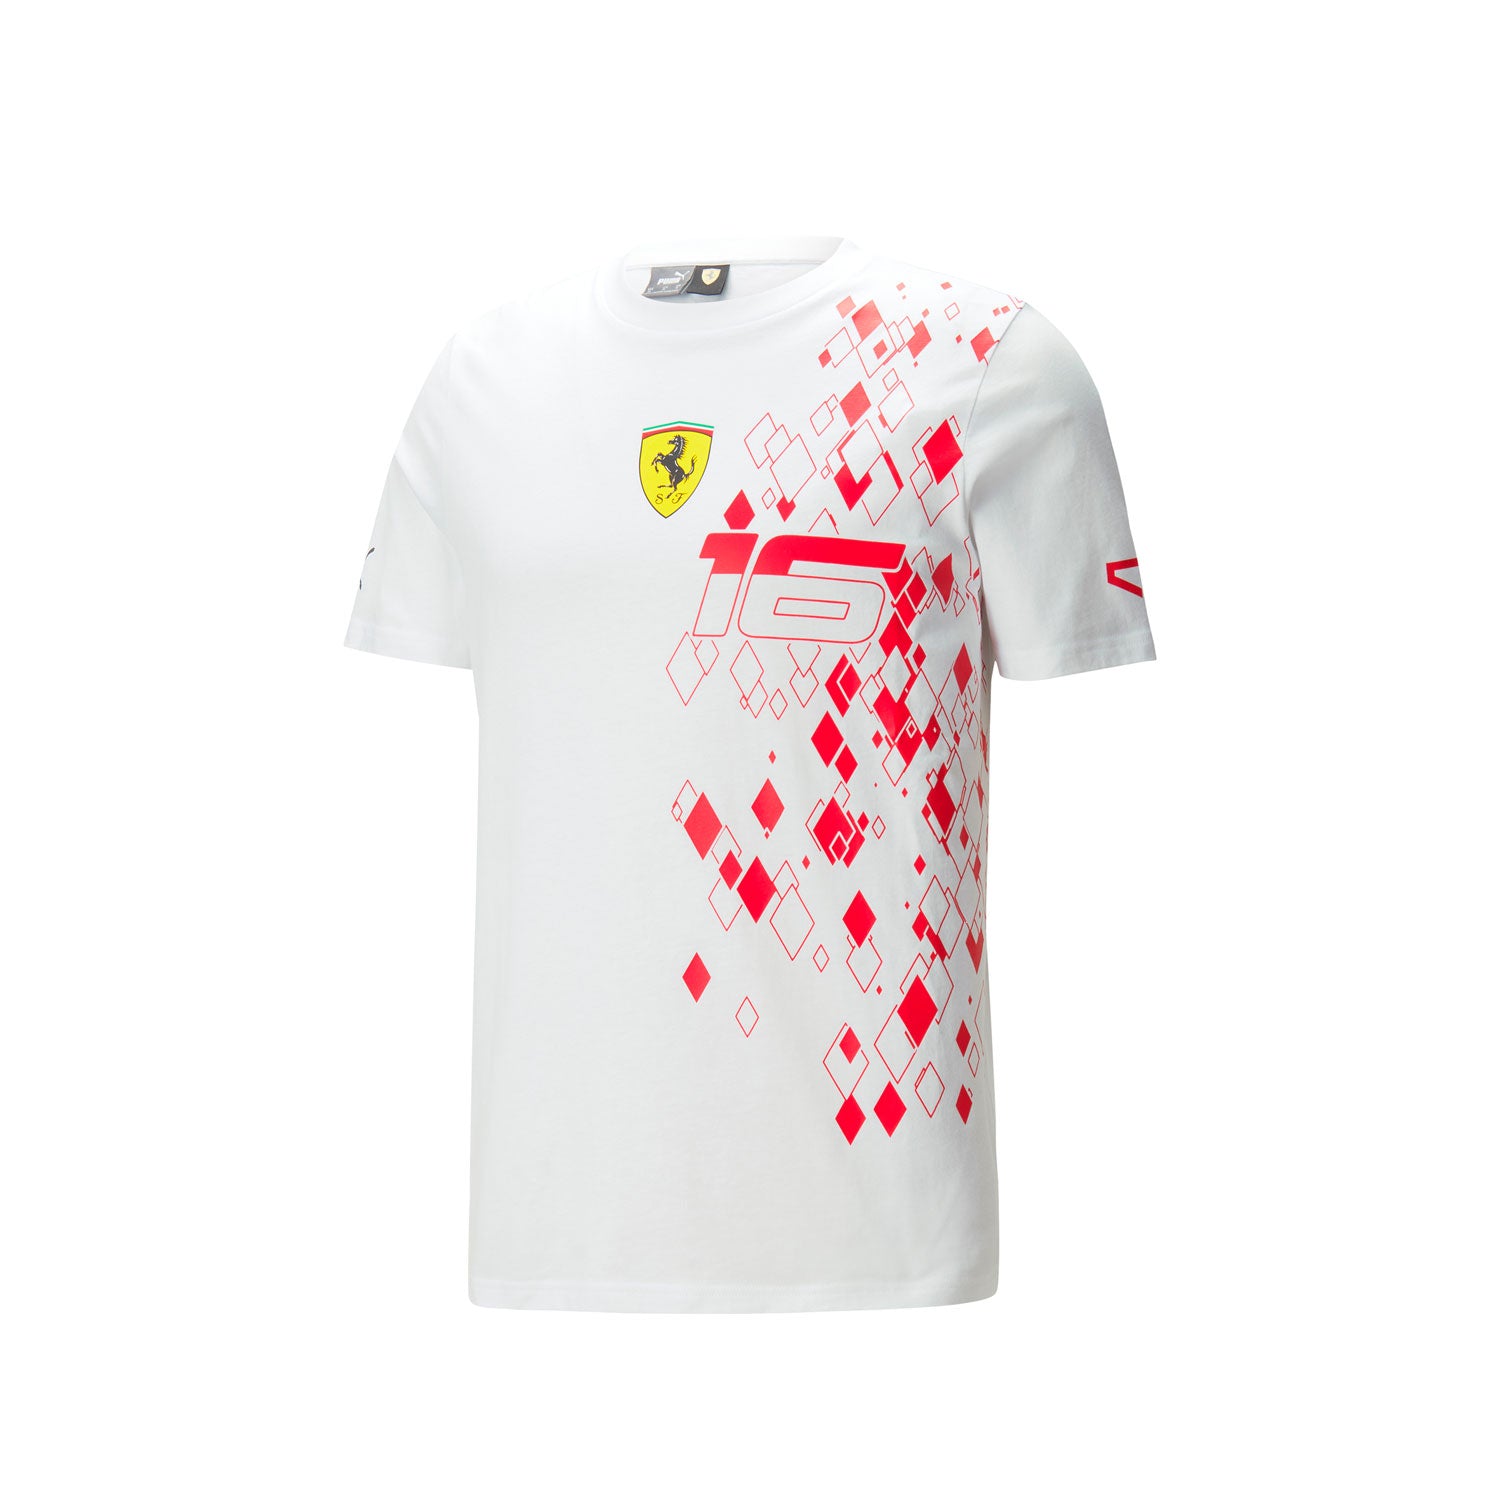 RED BULL RACING GP Miami men's t-shirt - white size XL